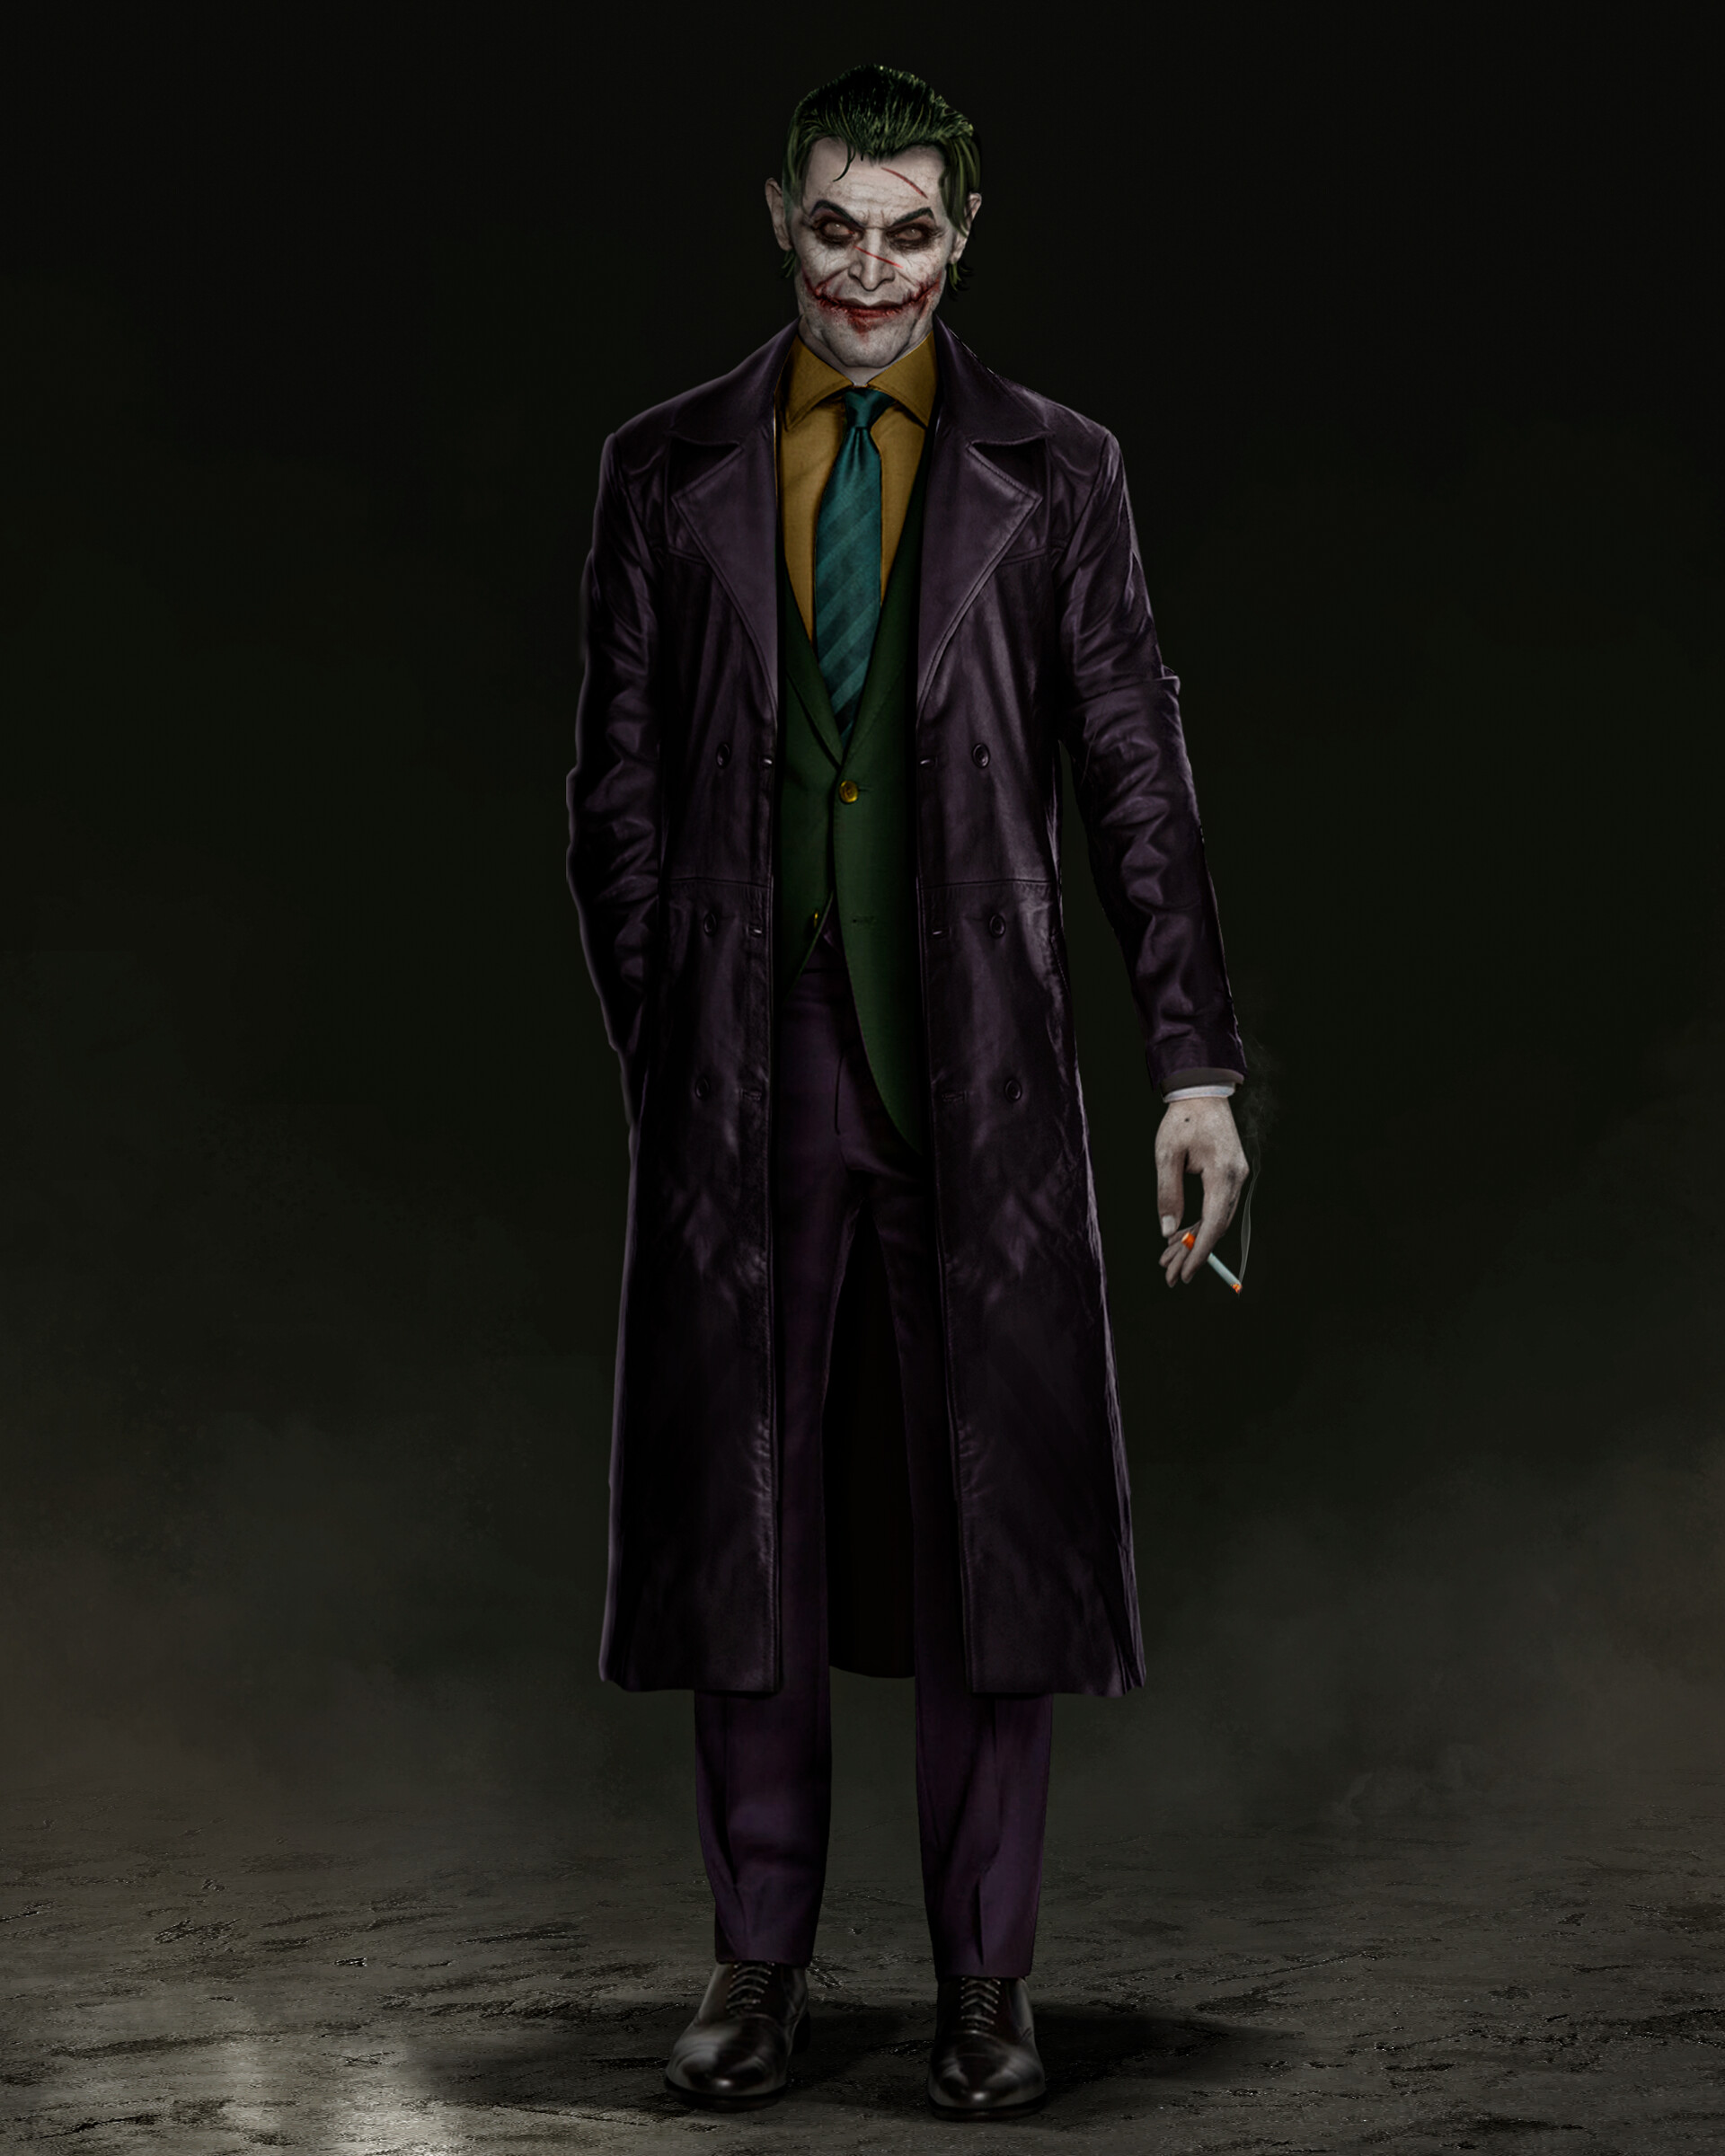 ArtStation - The Joker - The Batman - Concept / Fanart